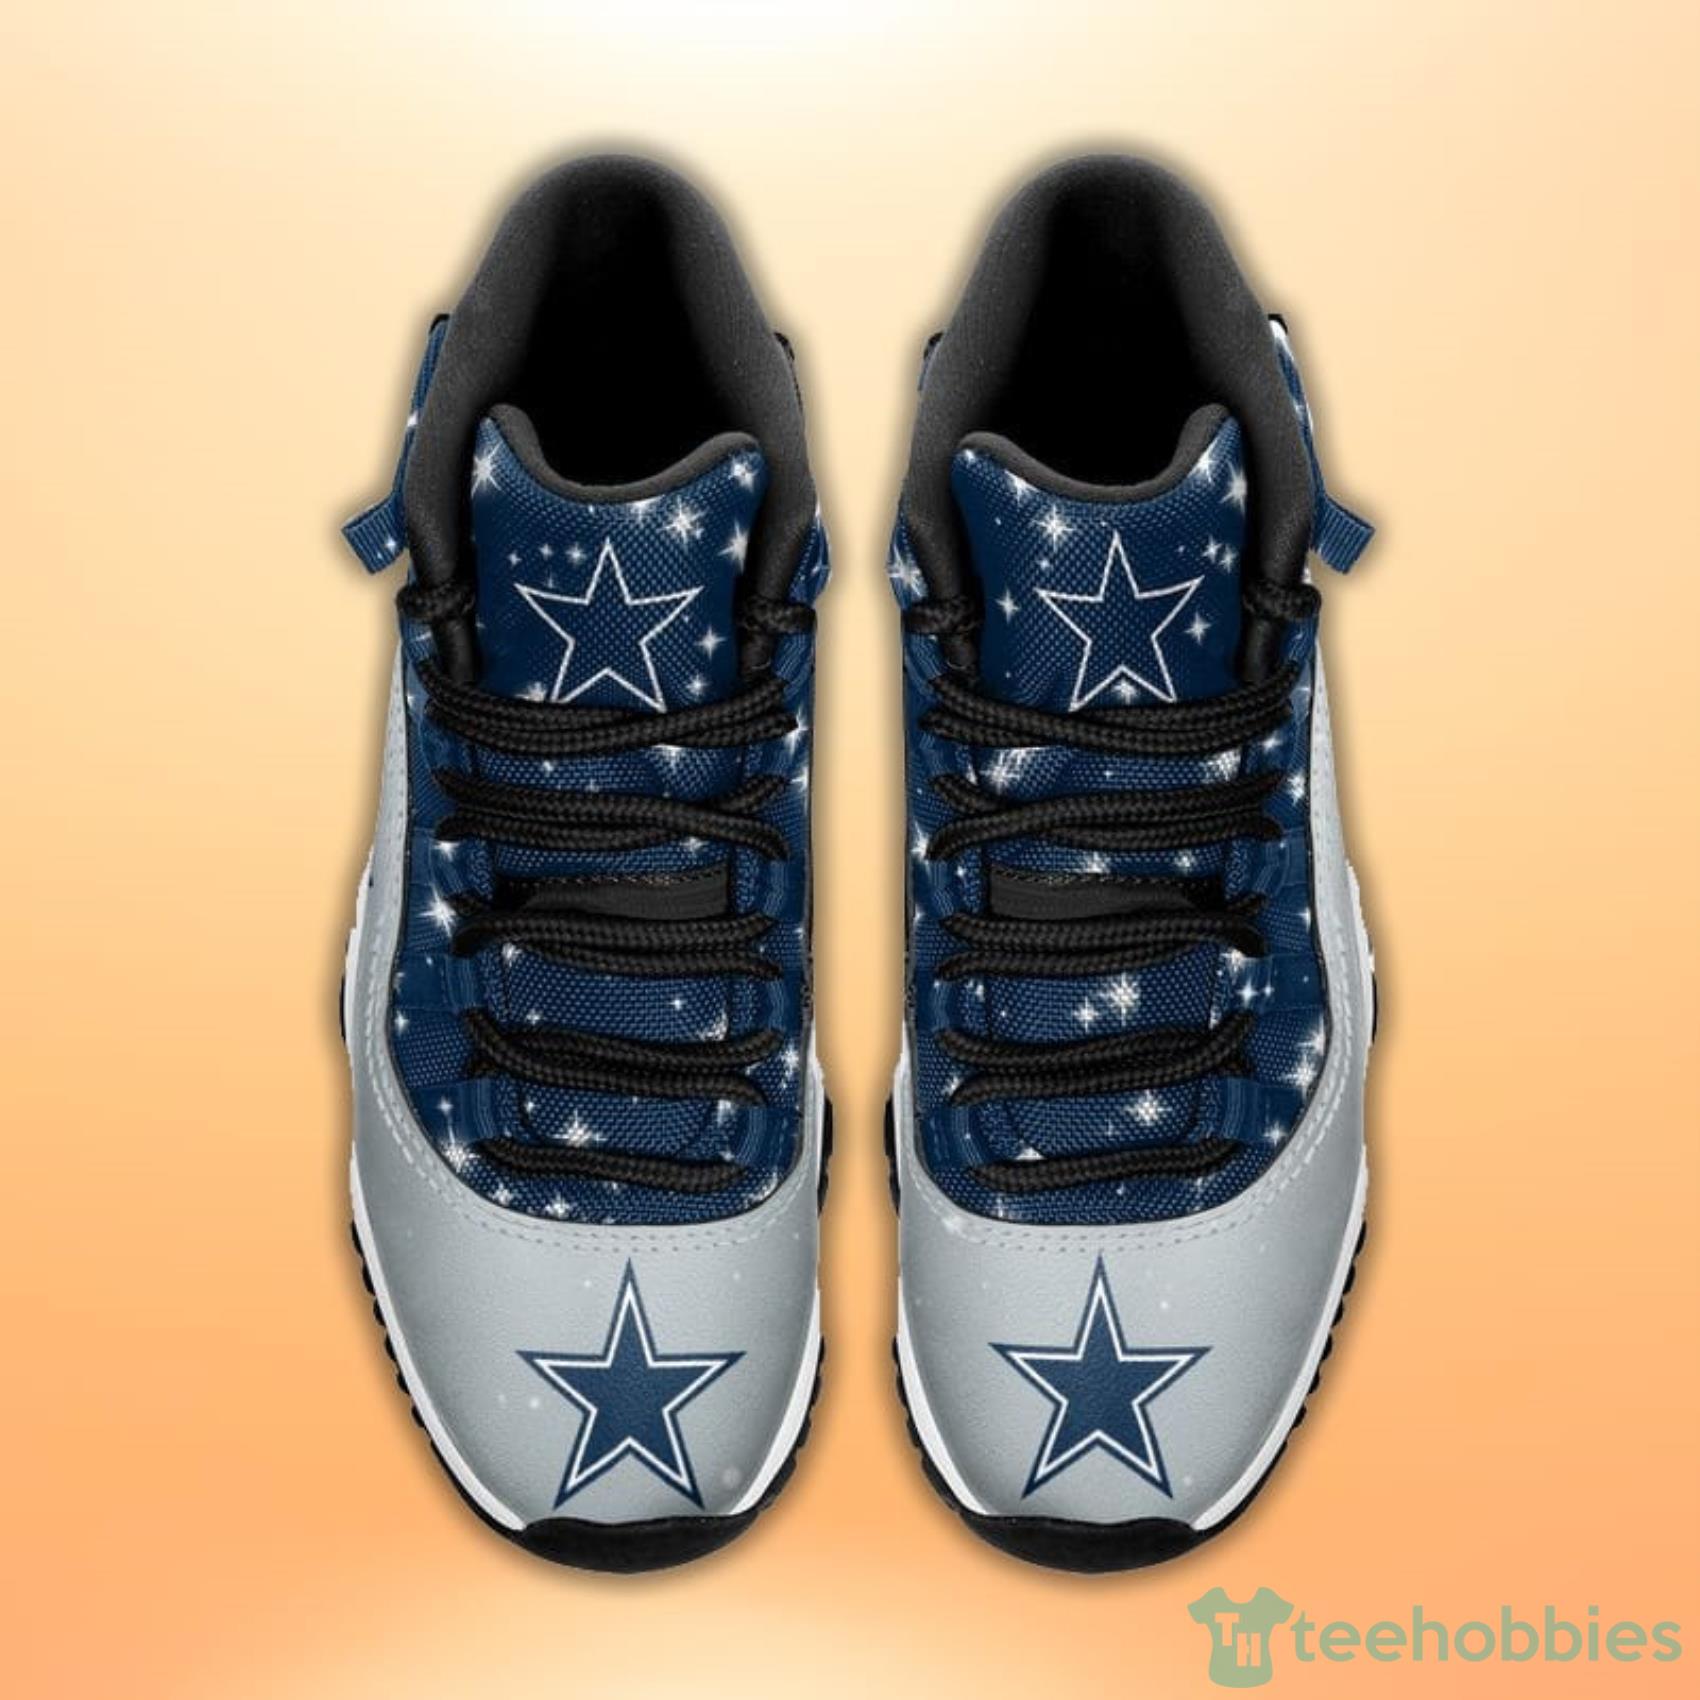 Dallas Cowboys Christmas Pattern Style Sneaker Air Jordan 11 Shoes -  Freedomdesign